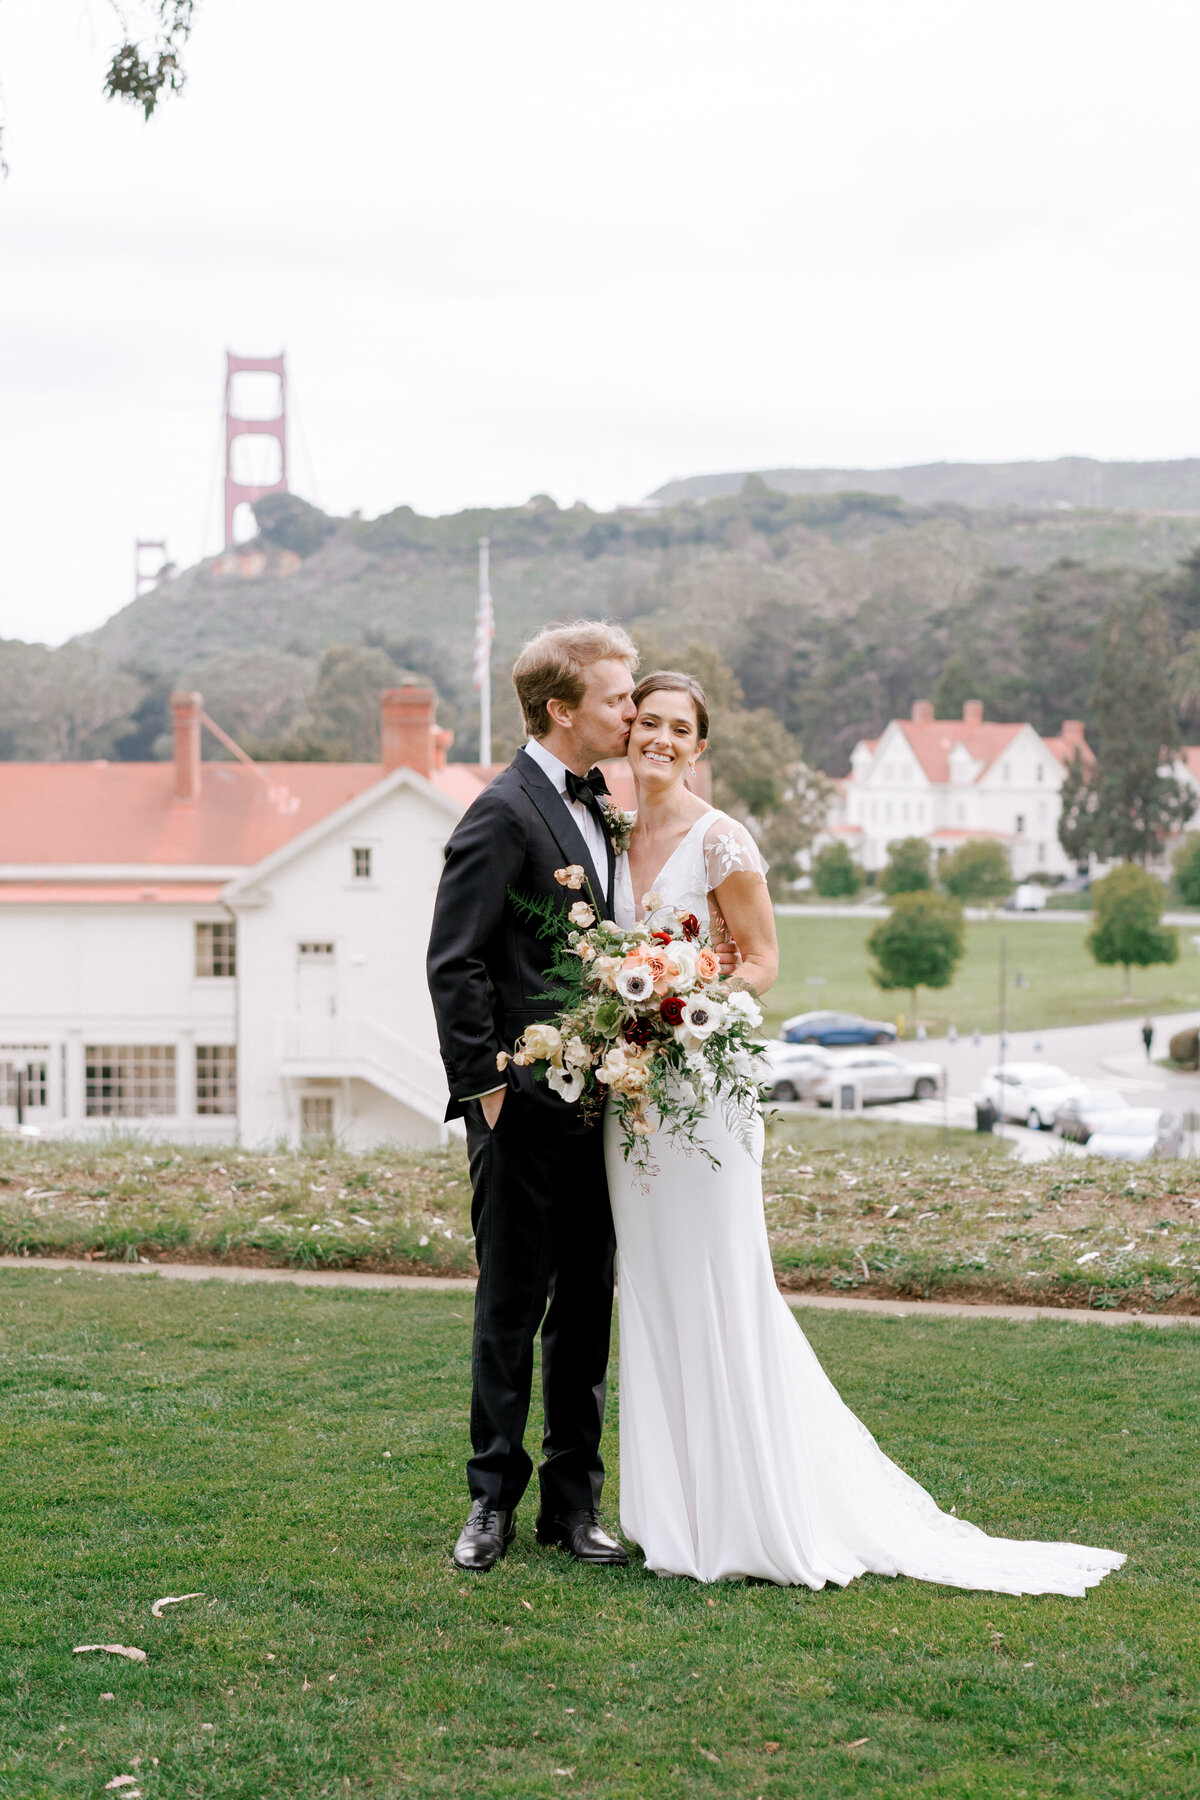 JESSICA RIEKE PHOTOGRAPHY - KRISTEN AND SAM WEDDING-398